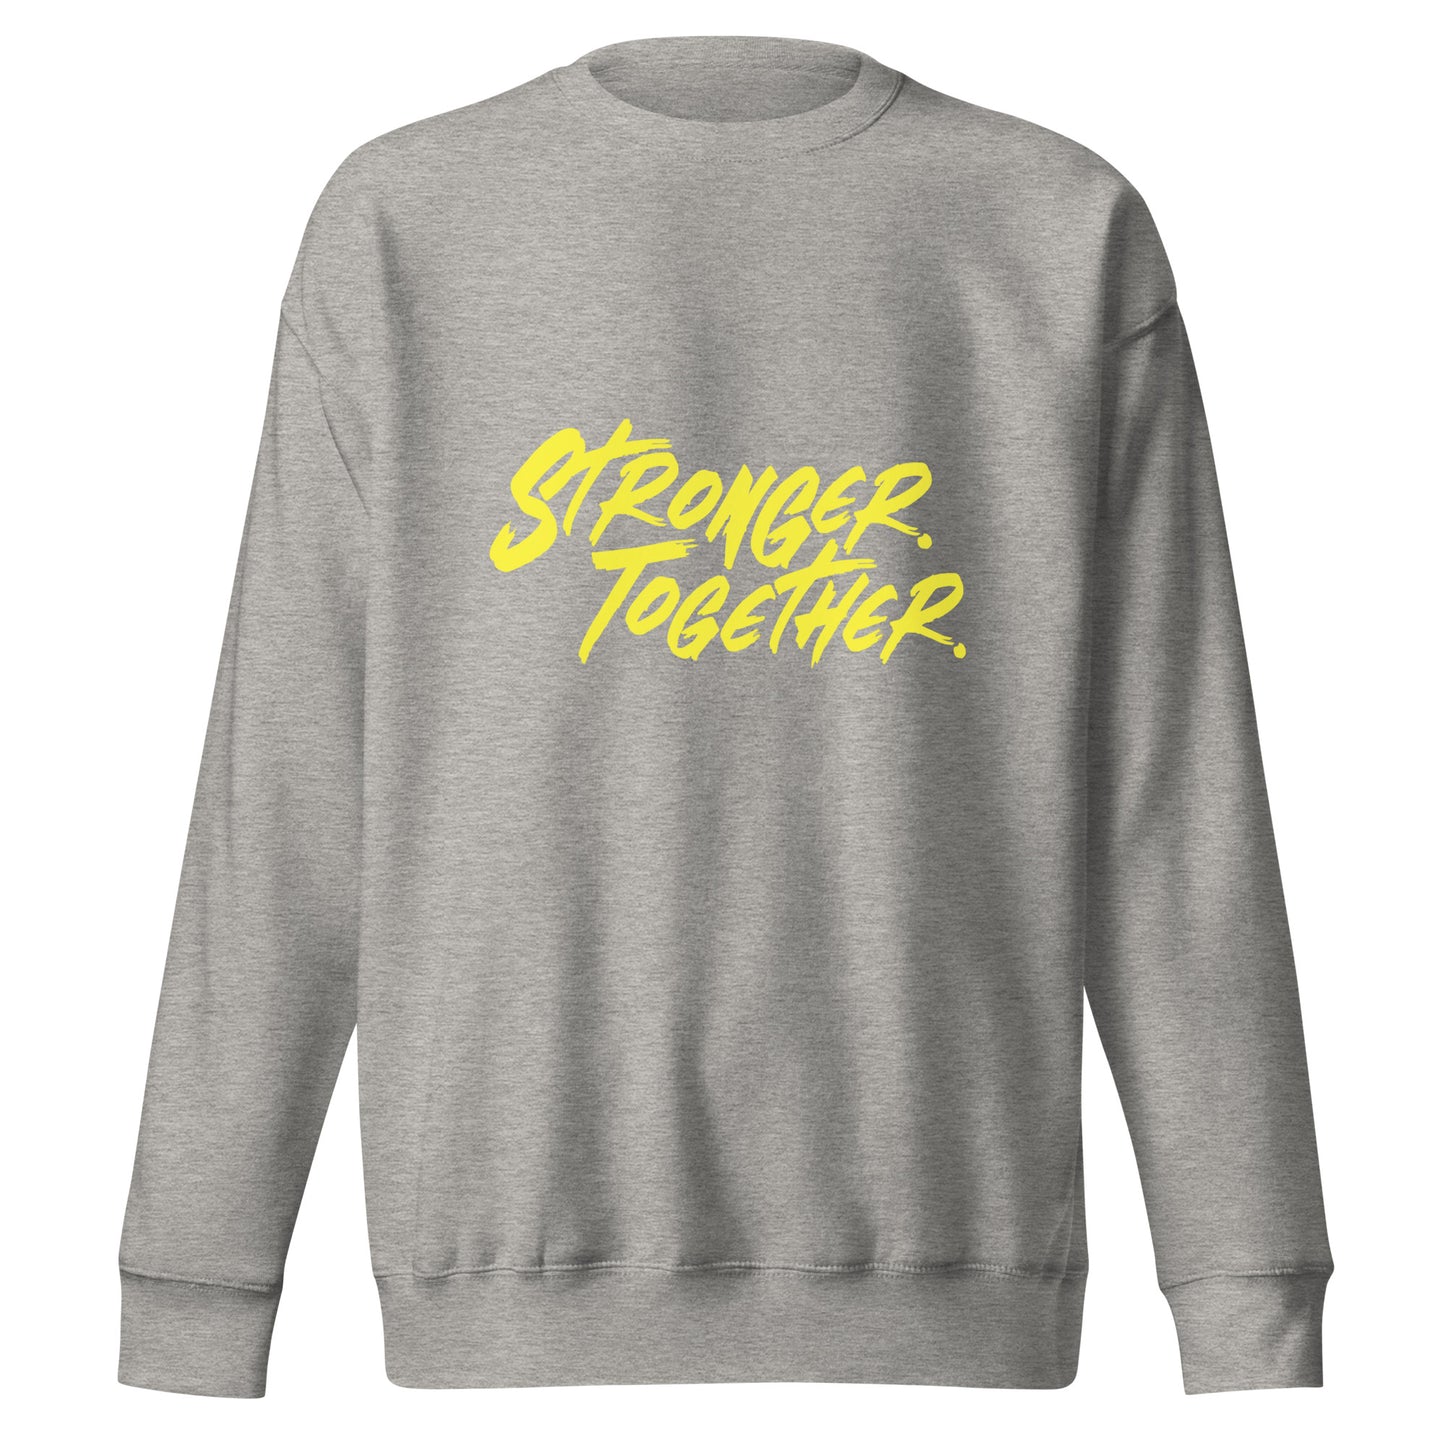 Unisex Stronger Together Sweatshirt